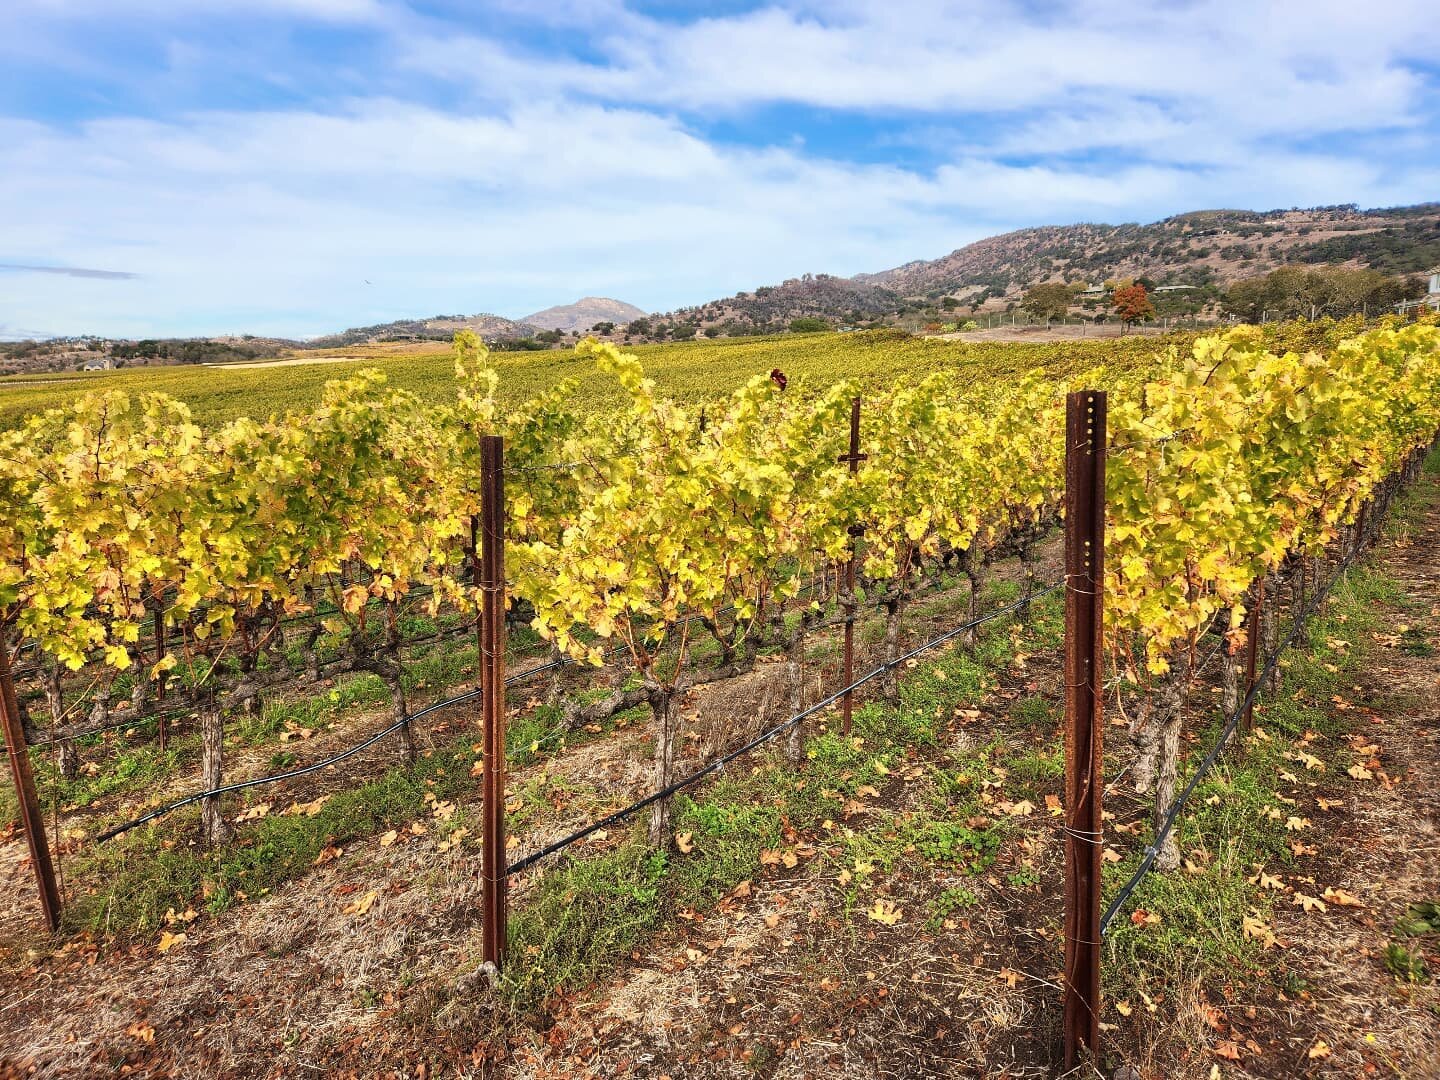 Brokenrock Vineyard 11/4/22

#fall #fallcolors #vineyard #Napa #wine #visitnapavalley